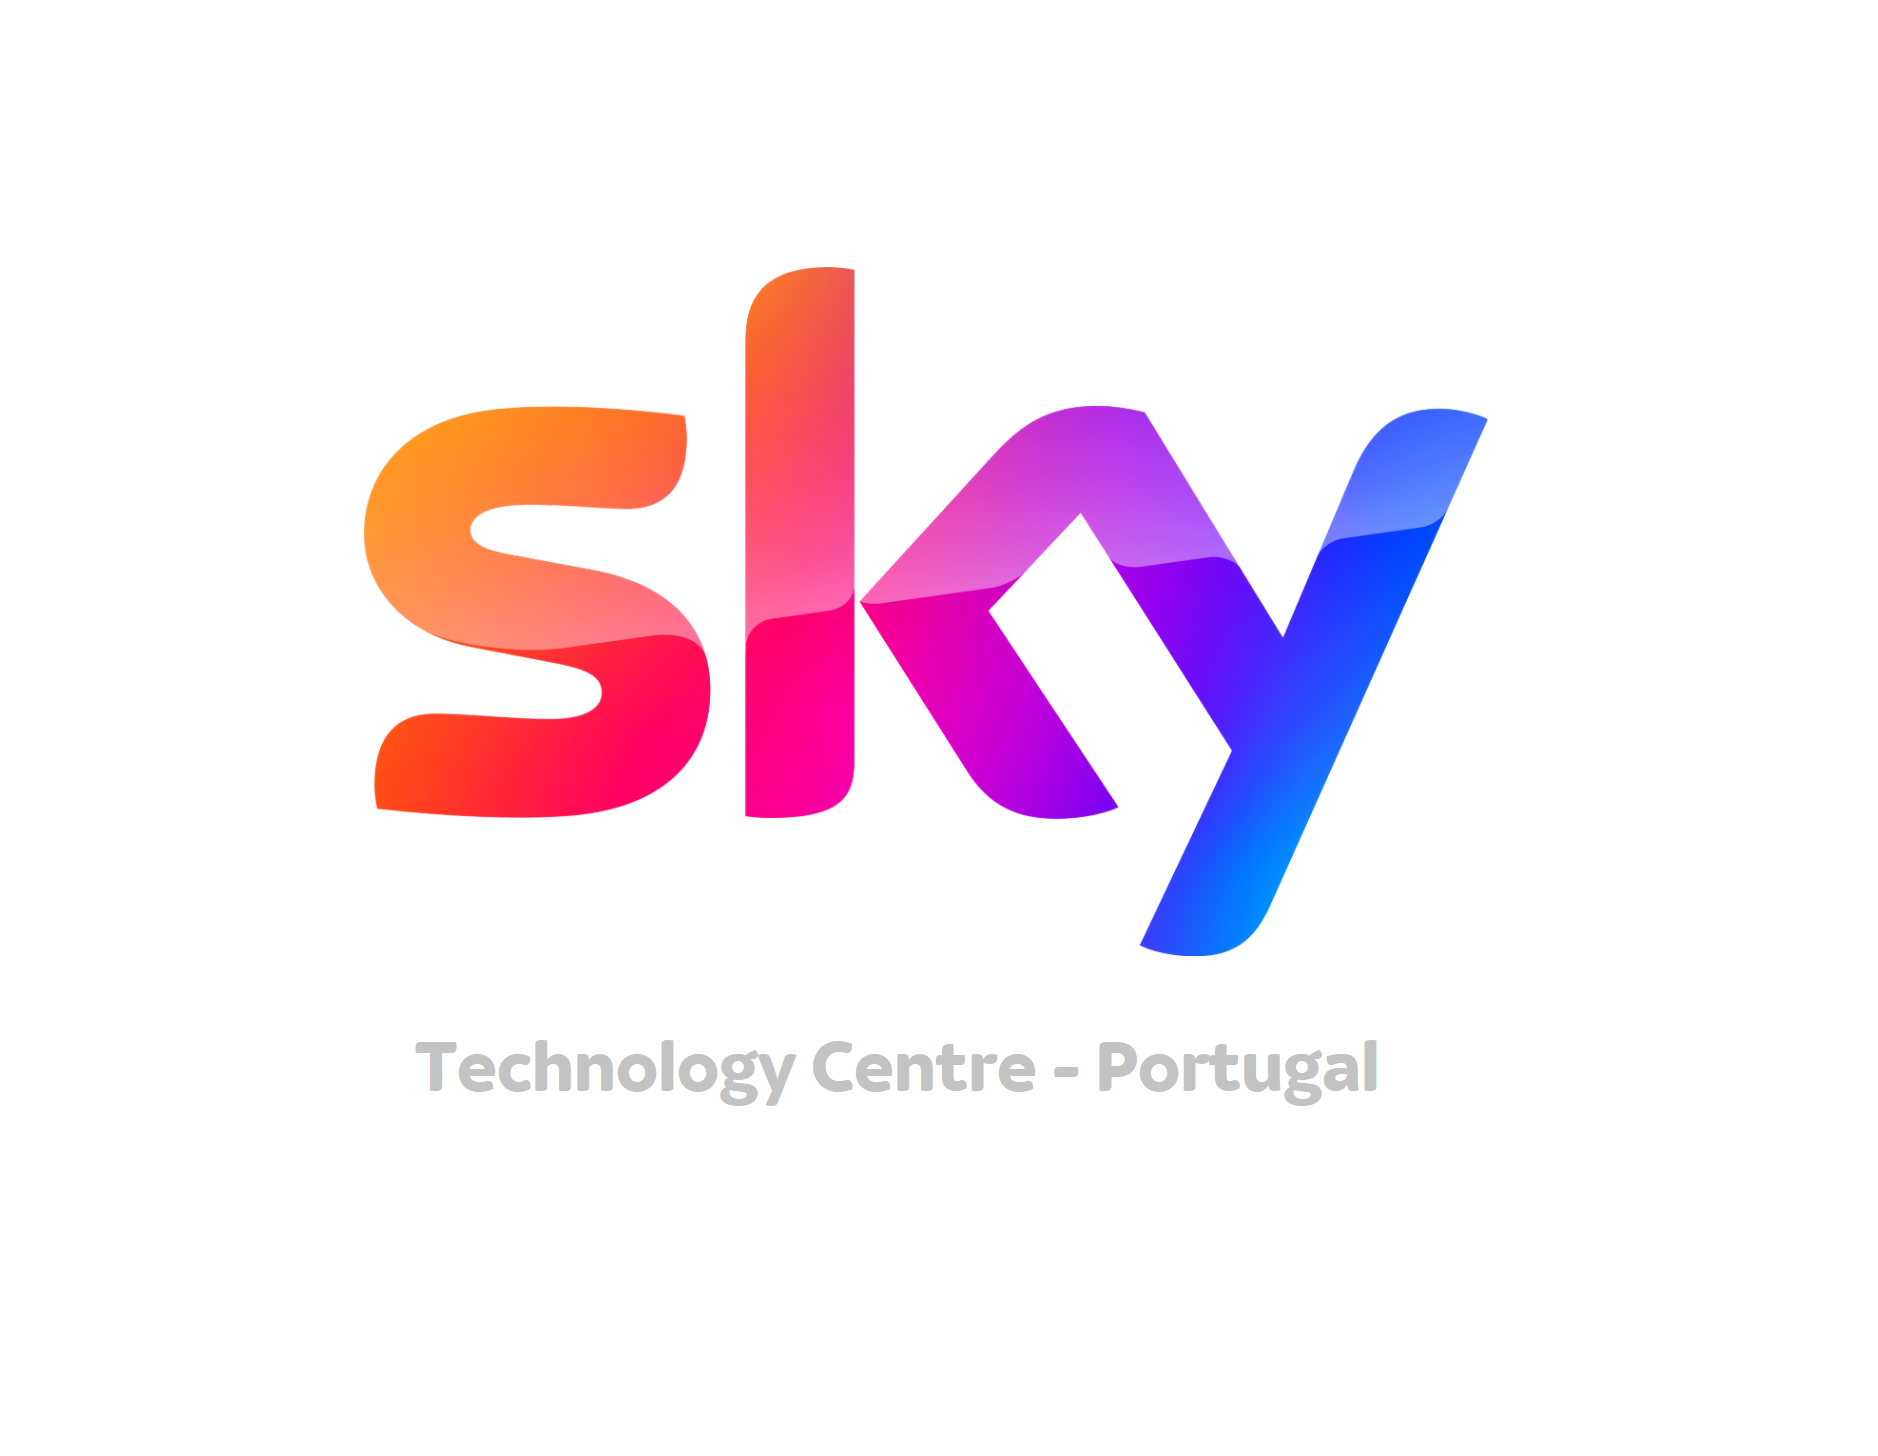 Sky Technology Centre – Portugal logo